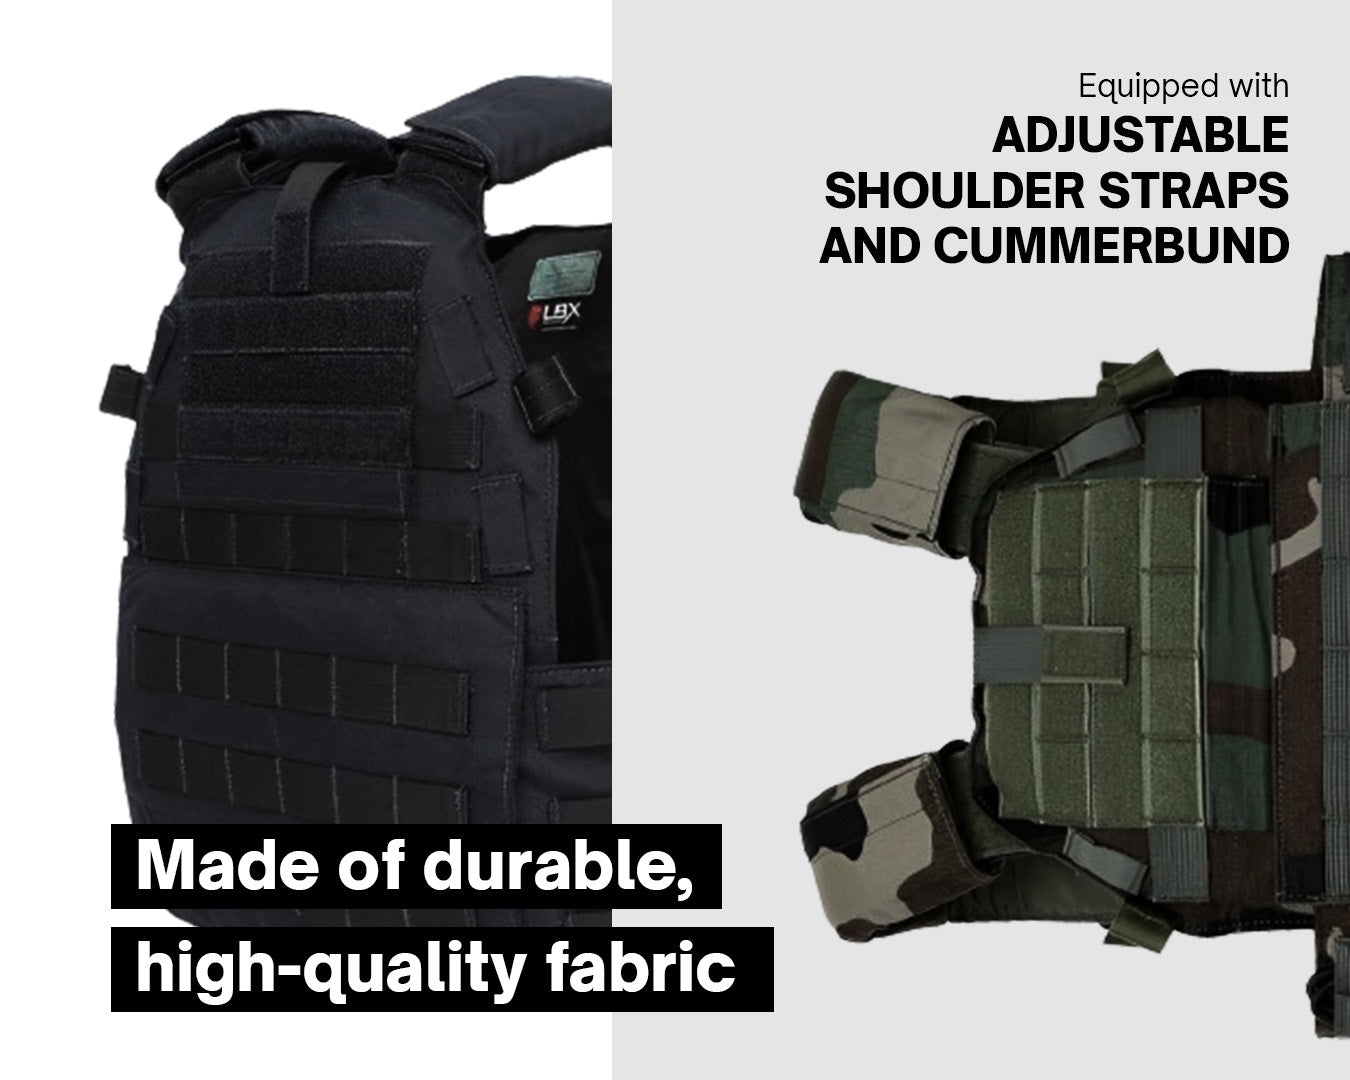 Equipped with adjustable shoulder straps and cummerbund